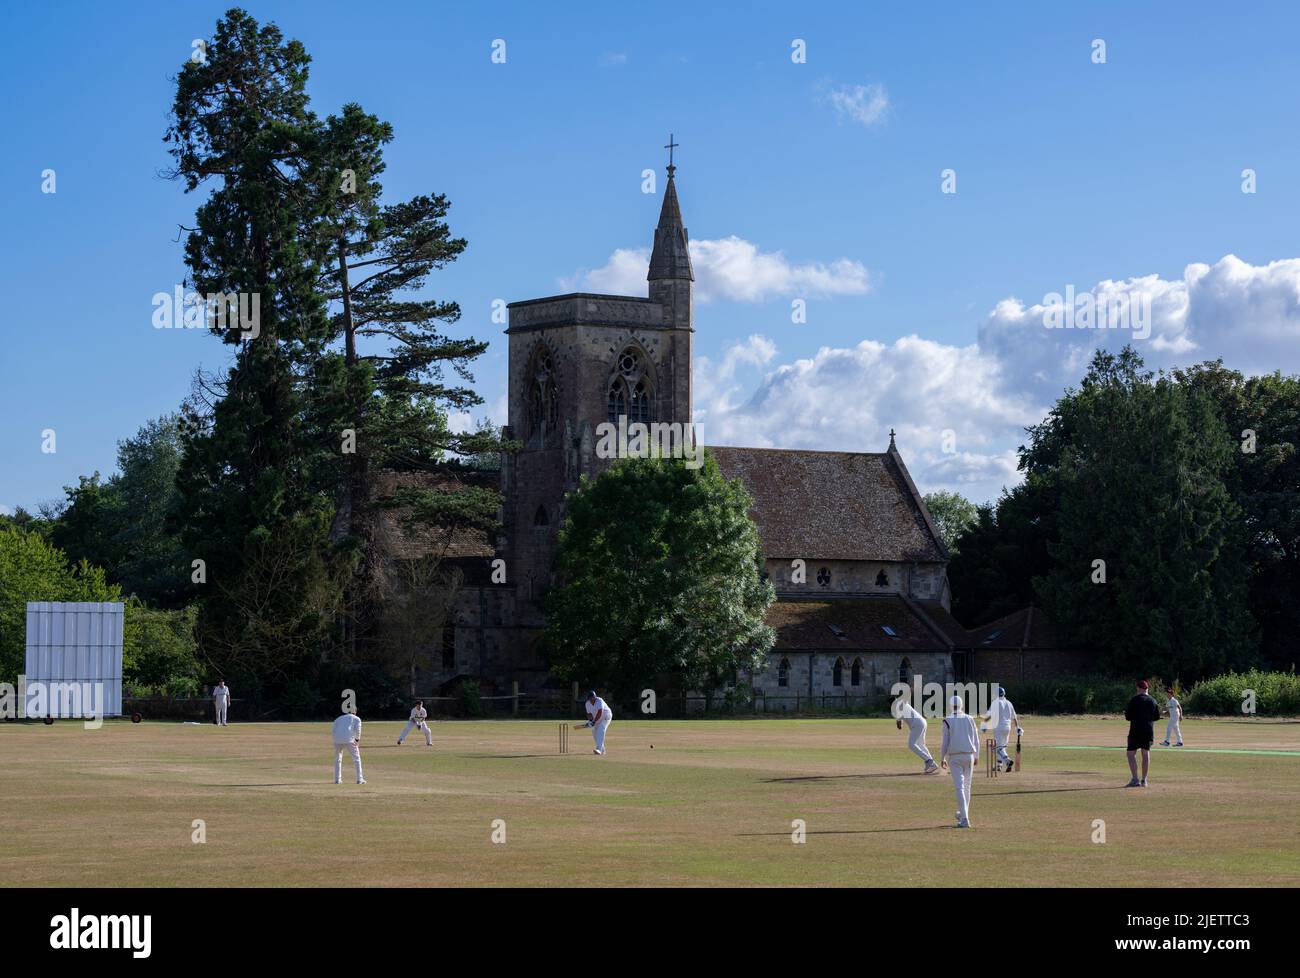 Cricket match at Salisbury, Wiltshire, England. Stock Photo